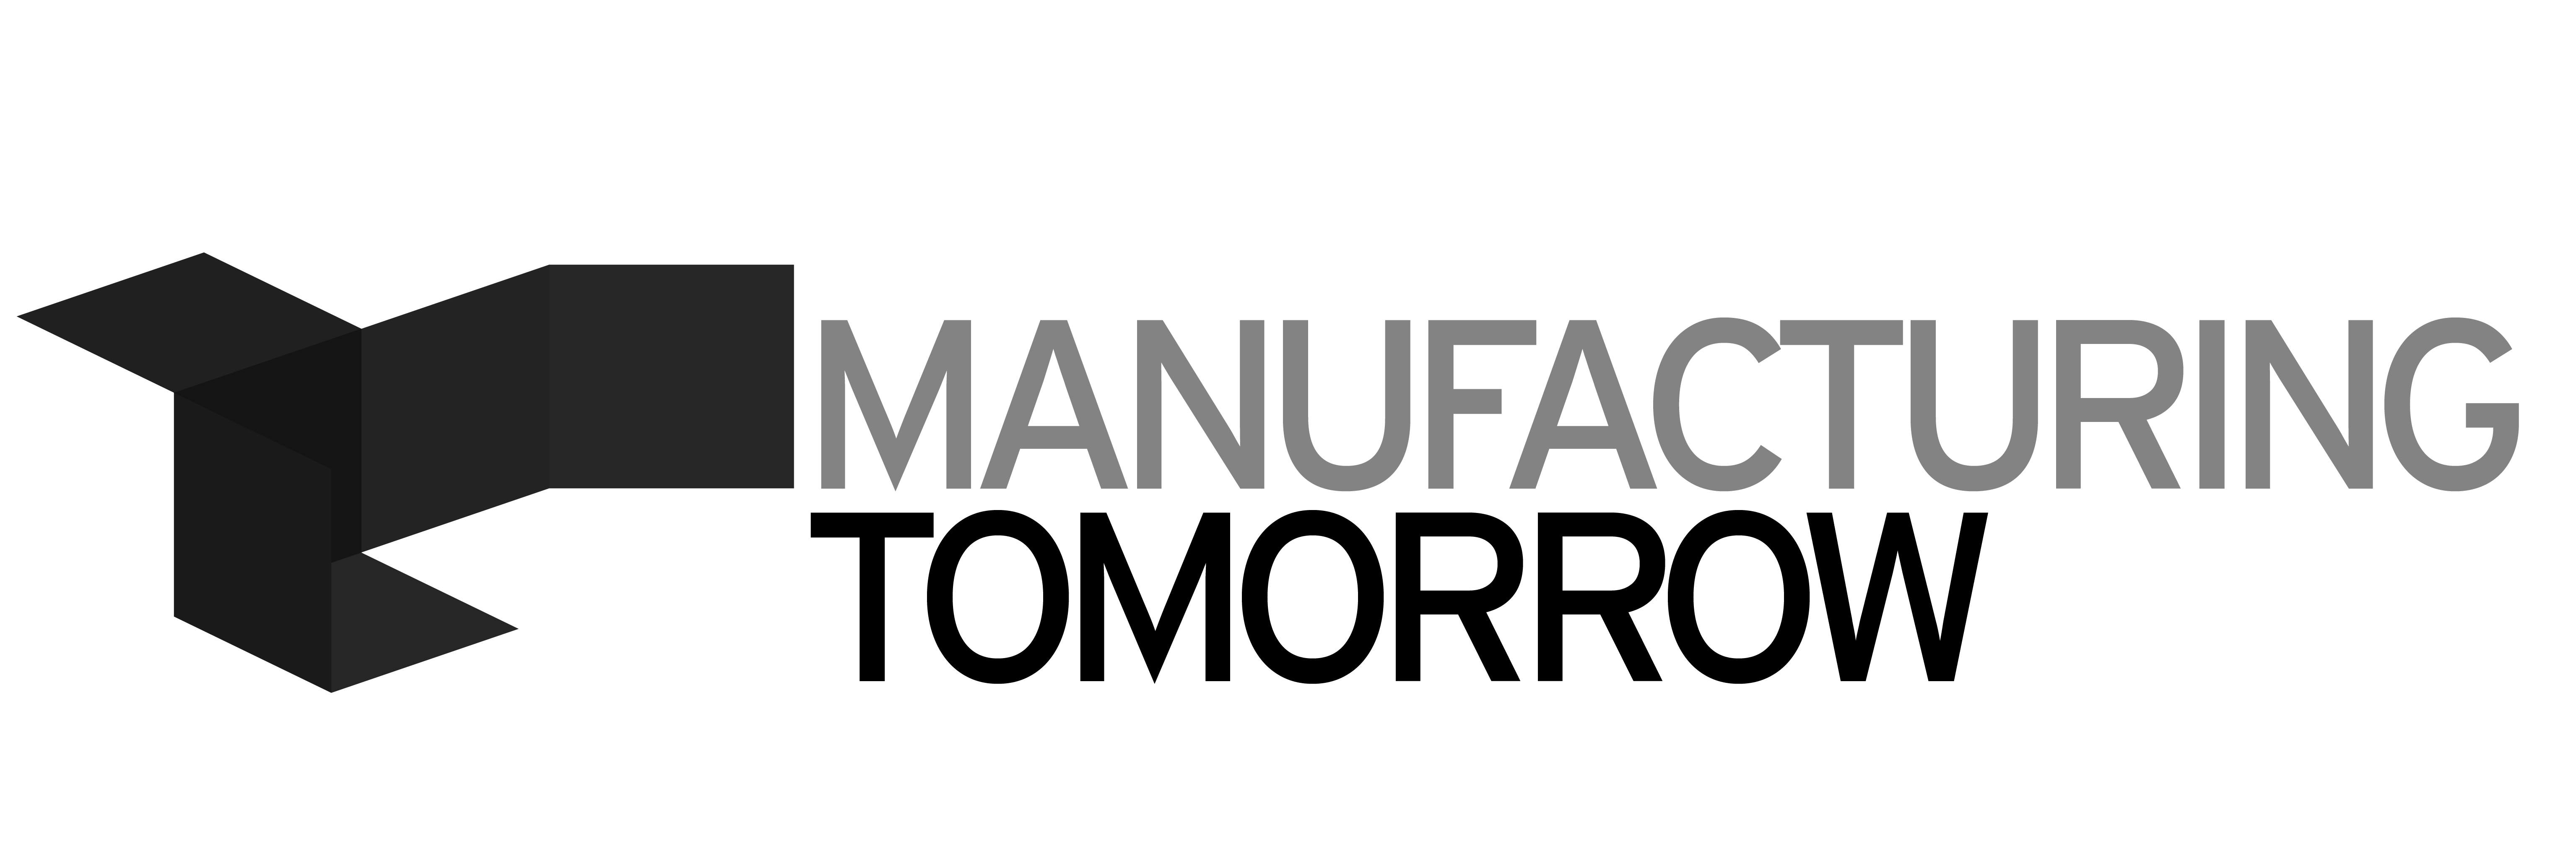 manufacturing Tomorrow logo gray 